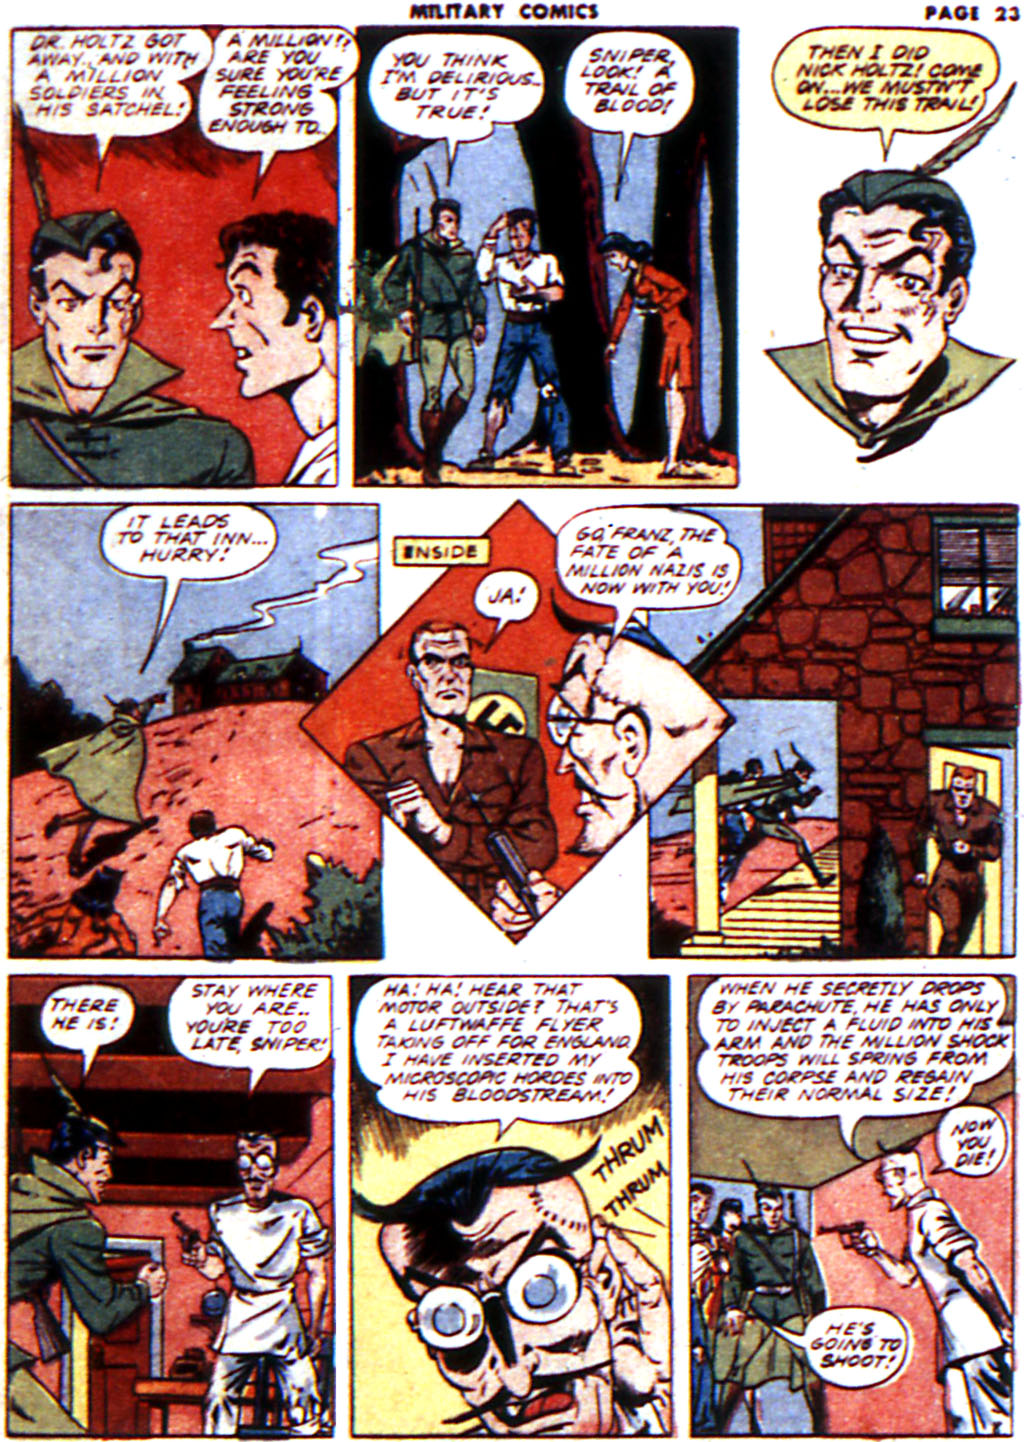 Read online Military Comics comic -  Issue #14 - 25